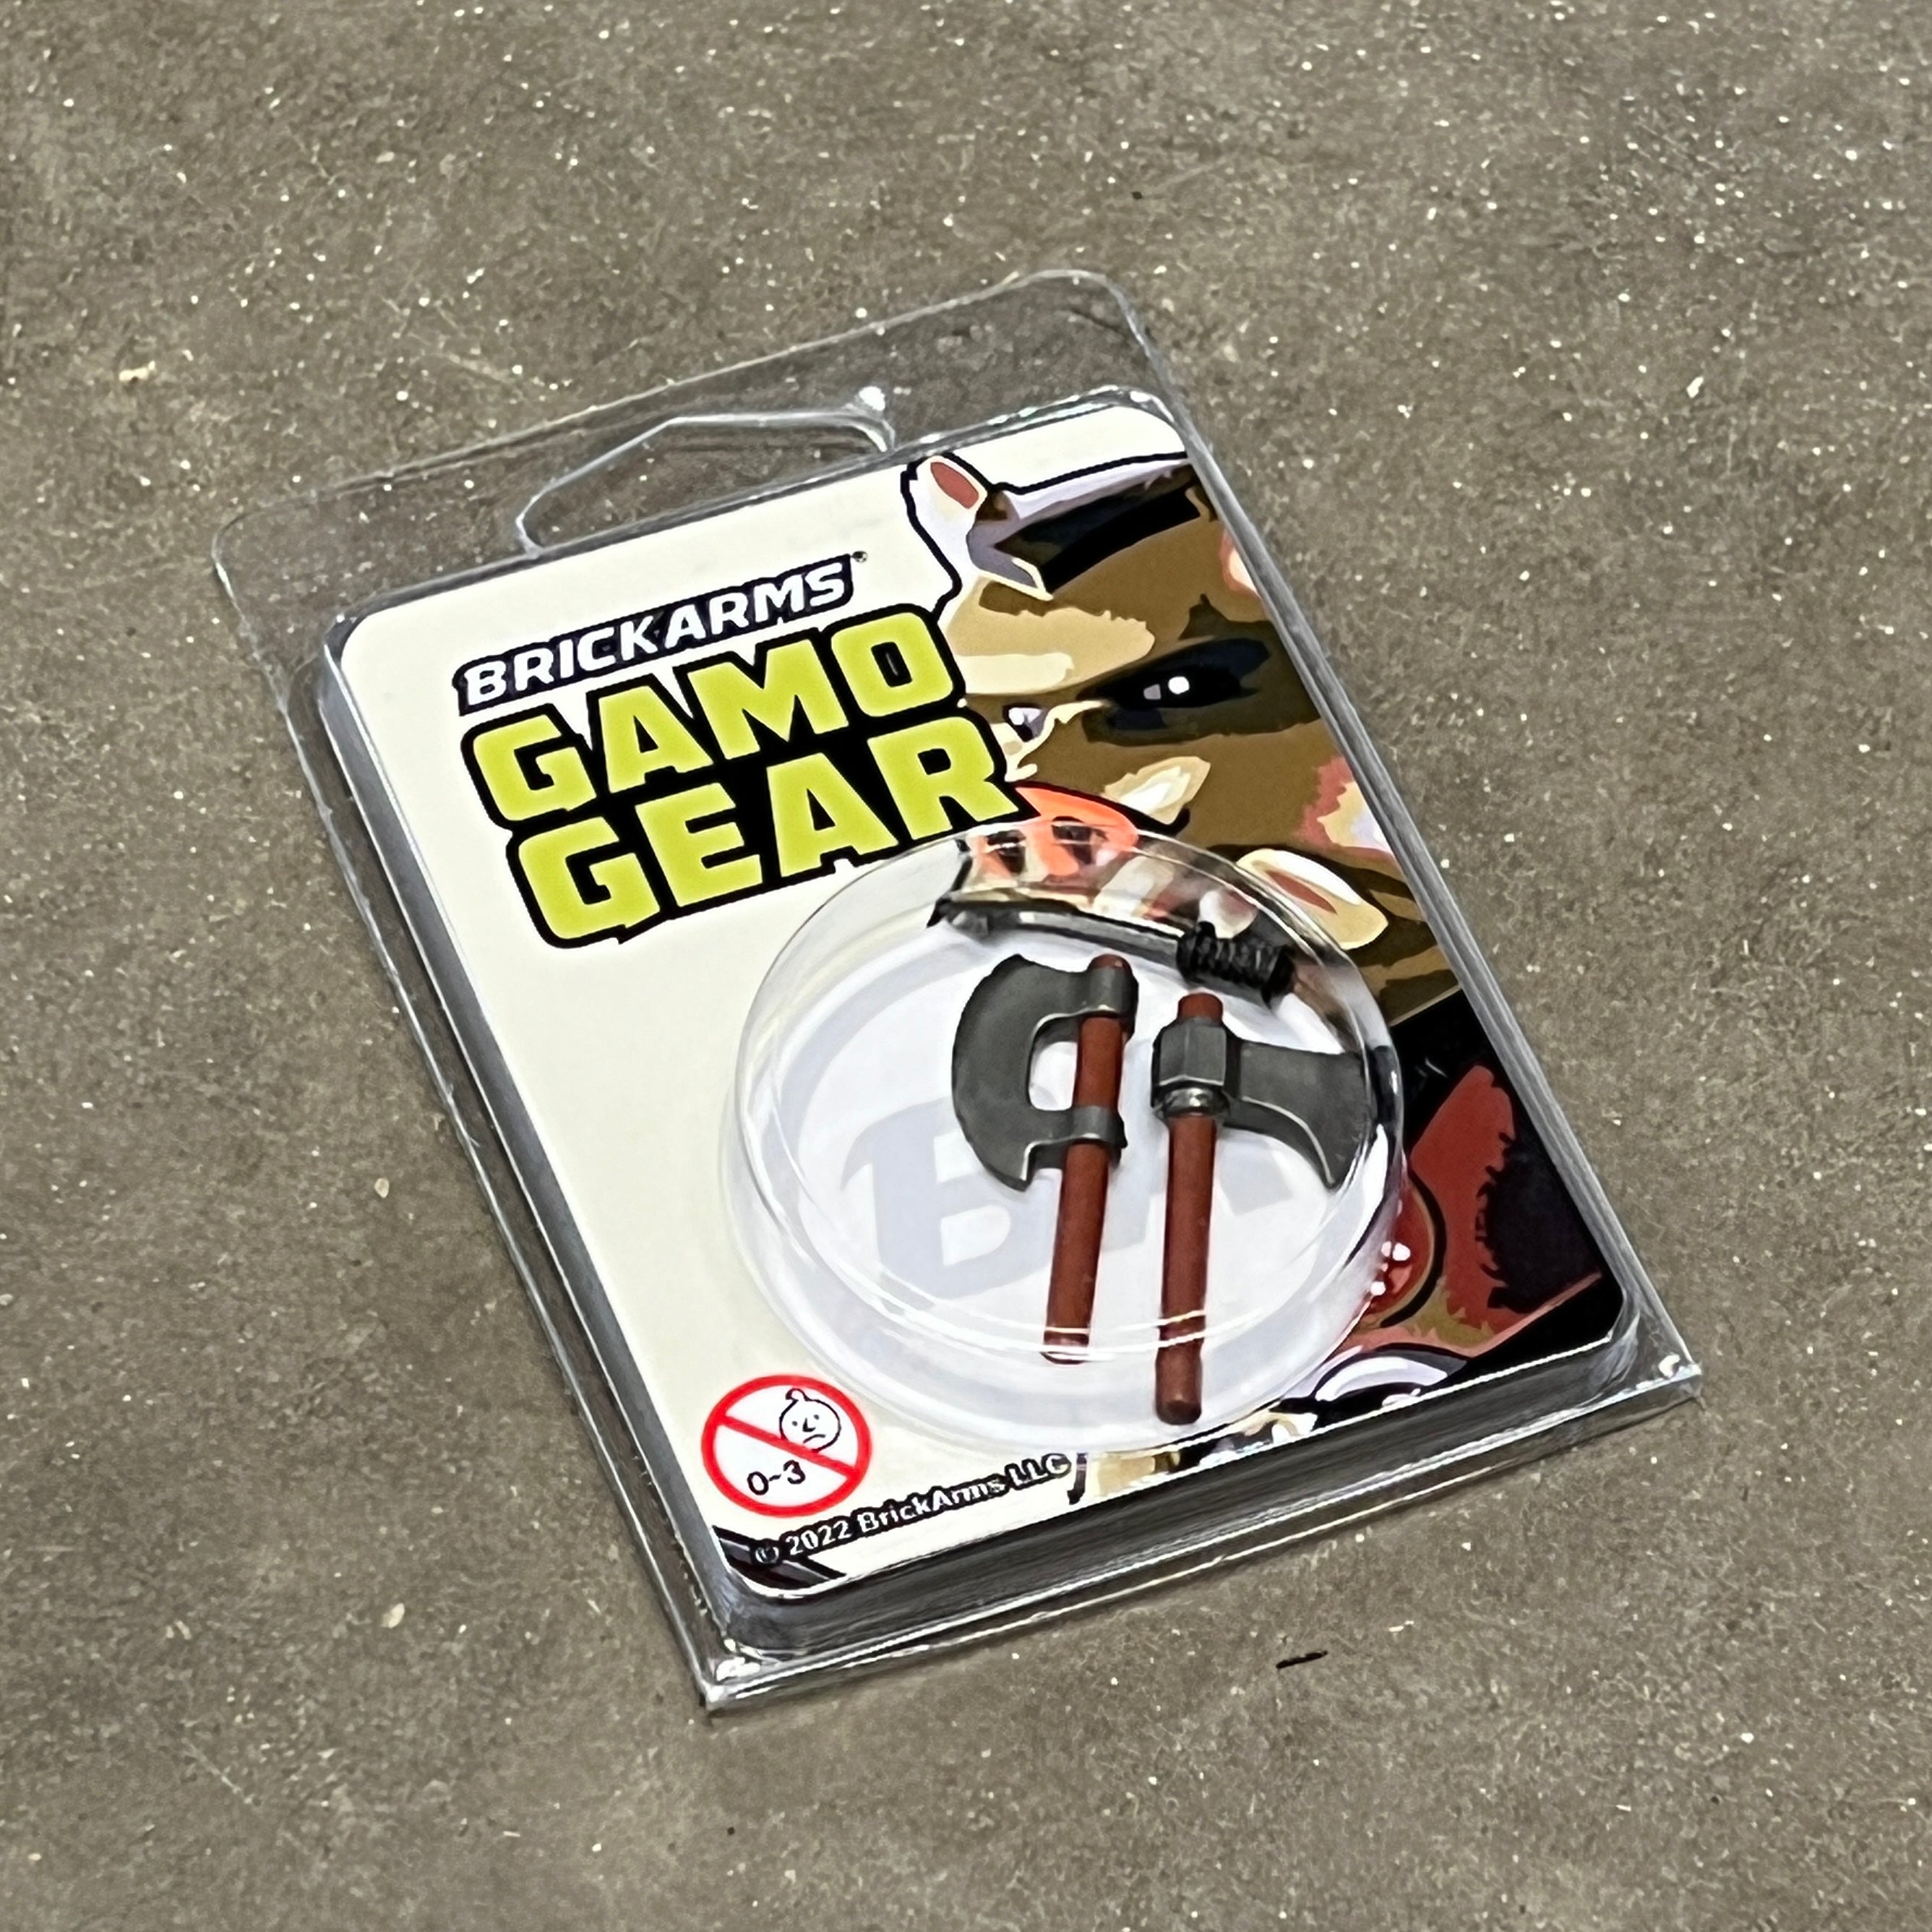 Gamo Gear - Overmolded Blades - The Minifig Co.